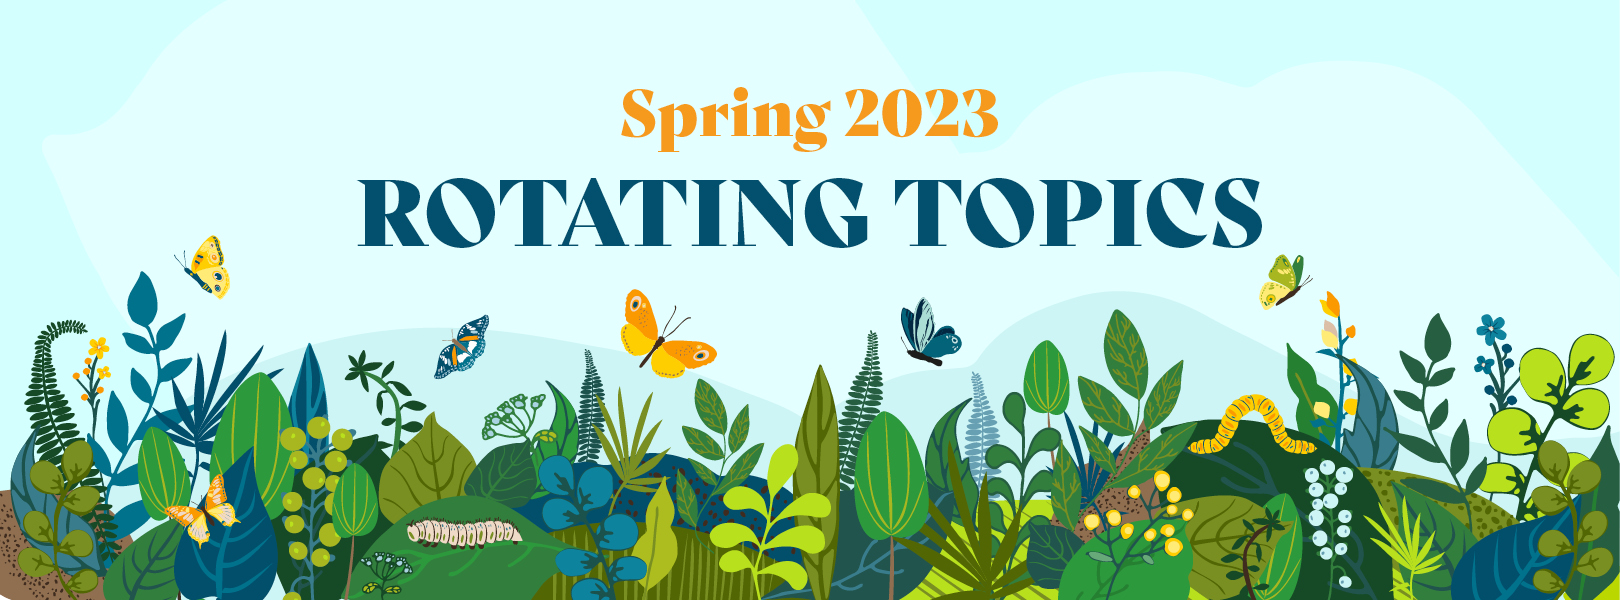 Spring 2023 Rotating Topics